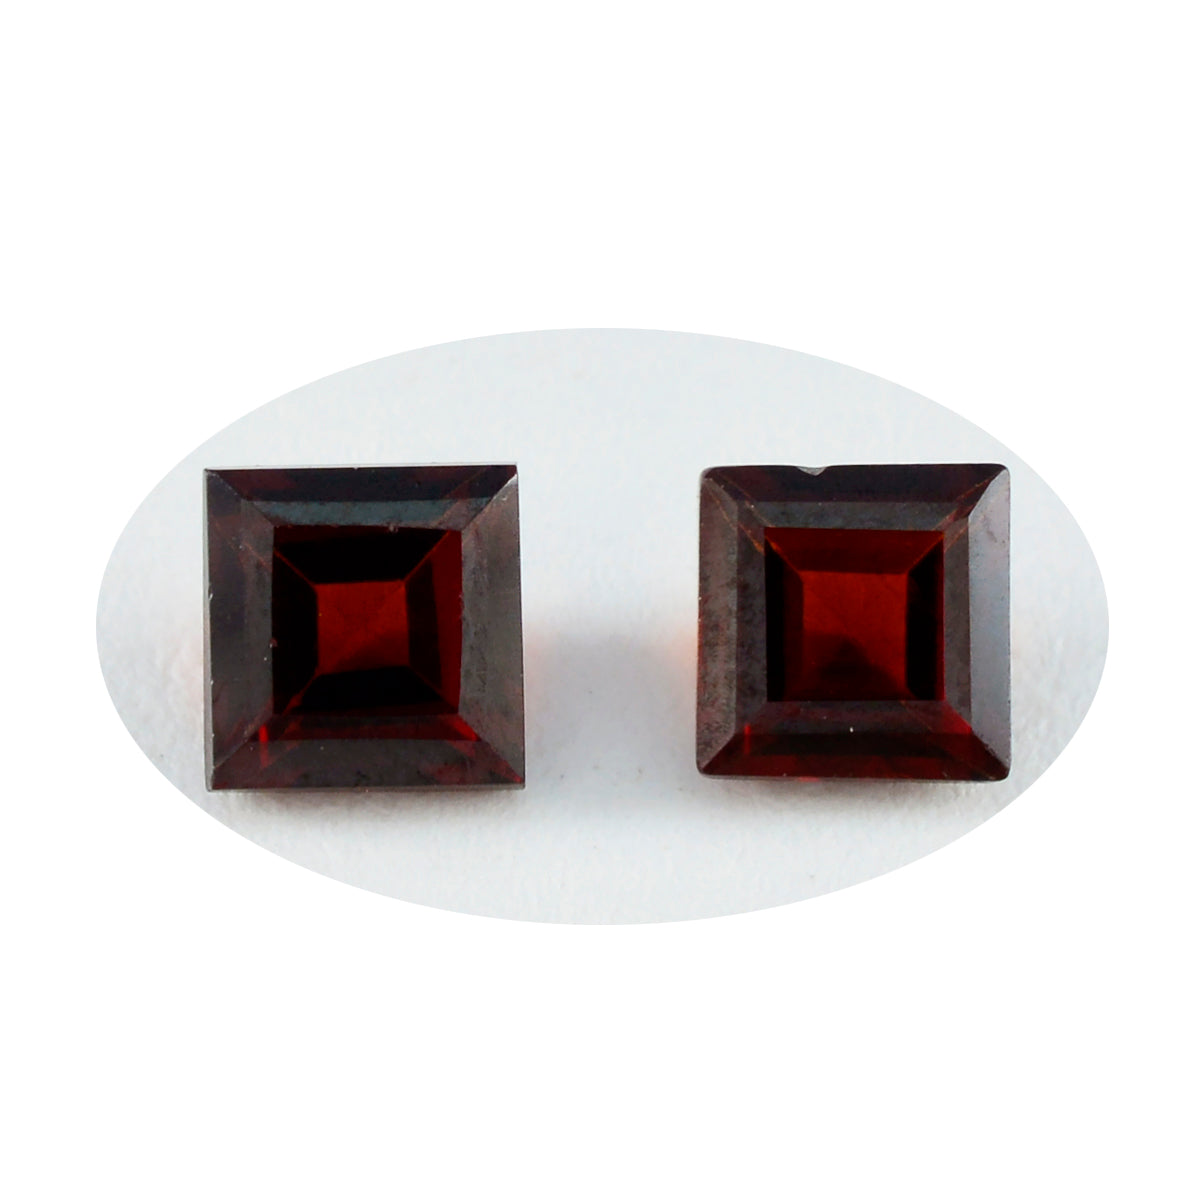 Riyogems 1PC Genuine Red Garnet Faceted 12x12 mm Square Shape excellent Quality Loose Gemstone